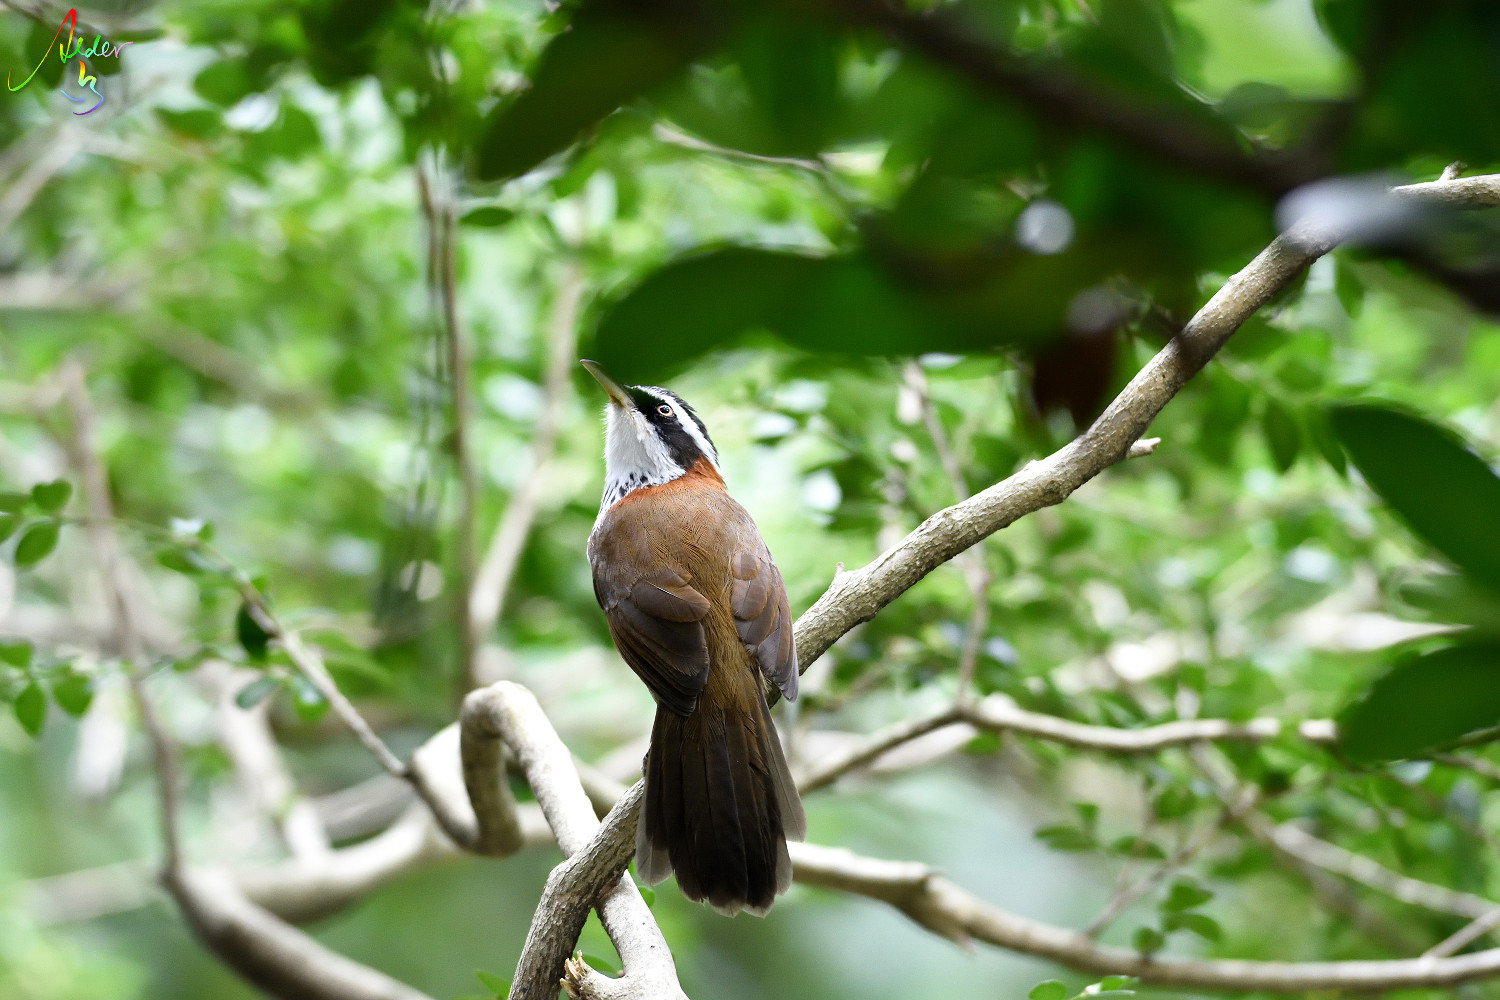 alder-s-bird-watching-notes-taiwan-barbet-botanical-garden